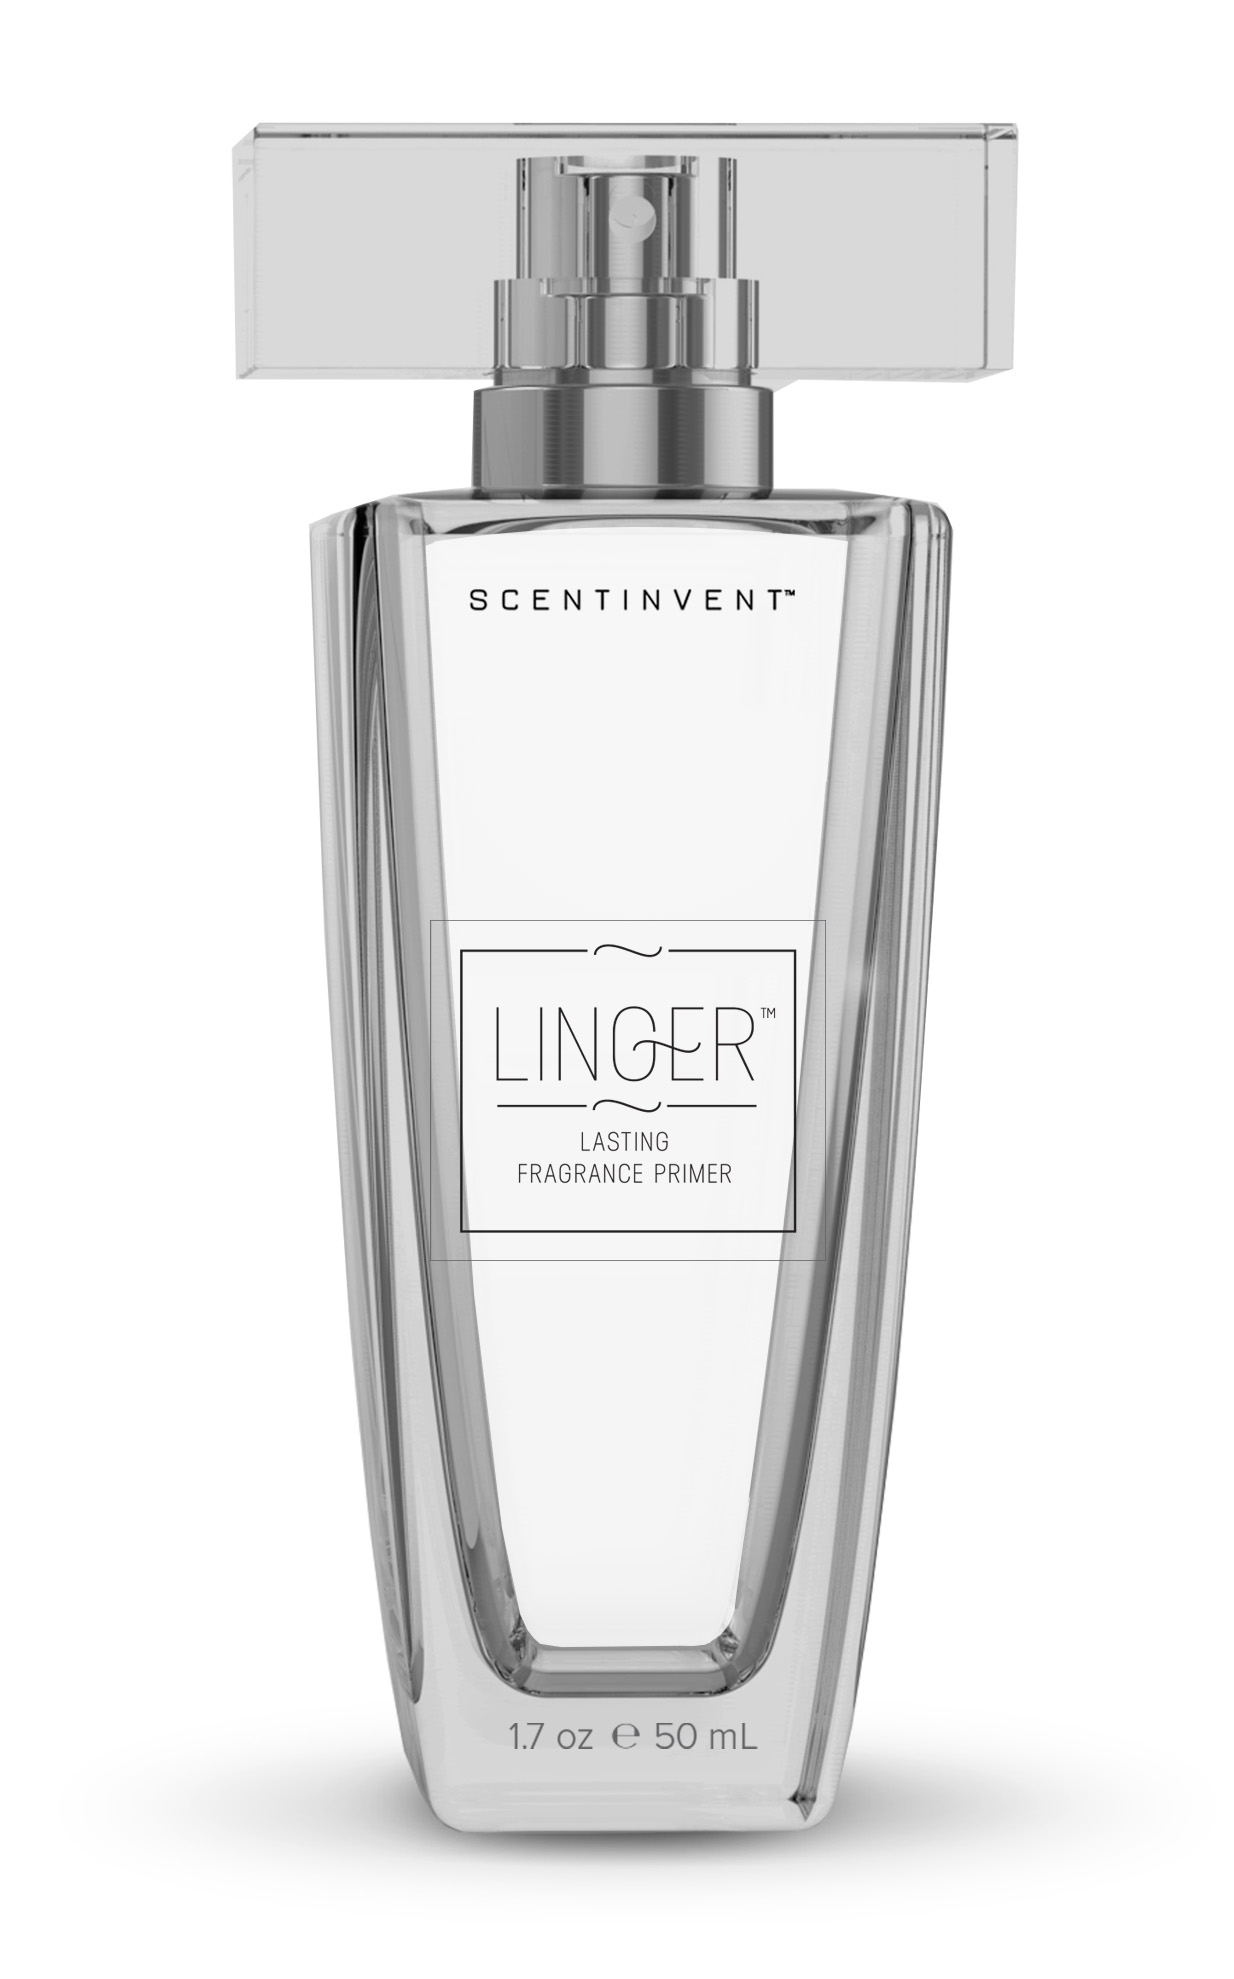 Bottle of Linger fragrance primer.